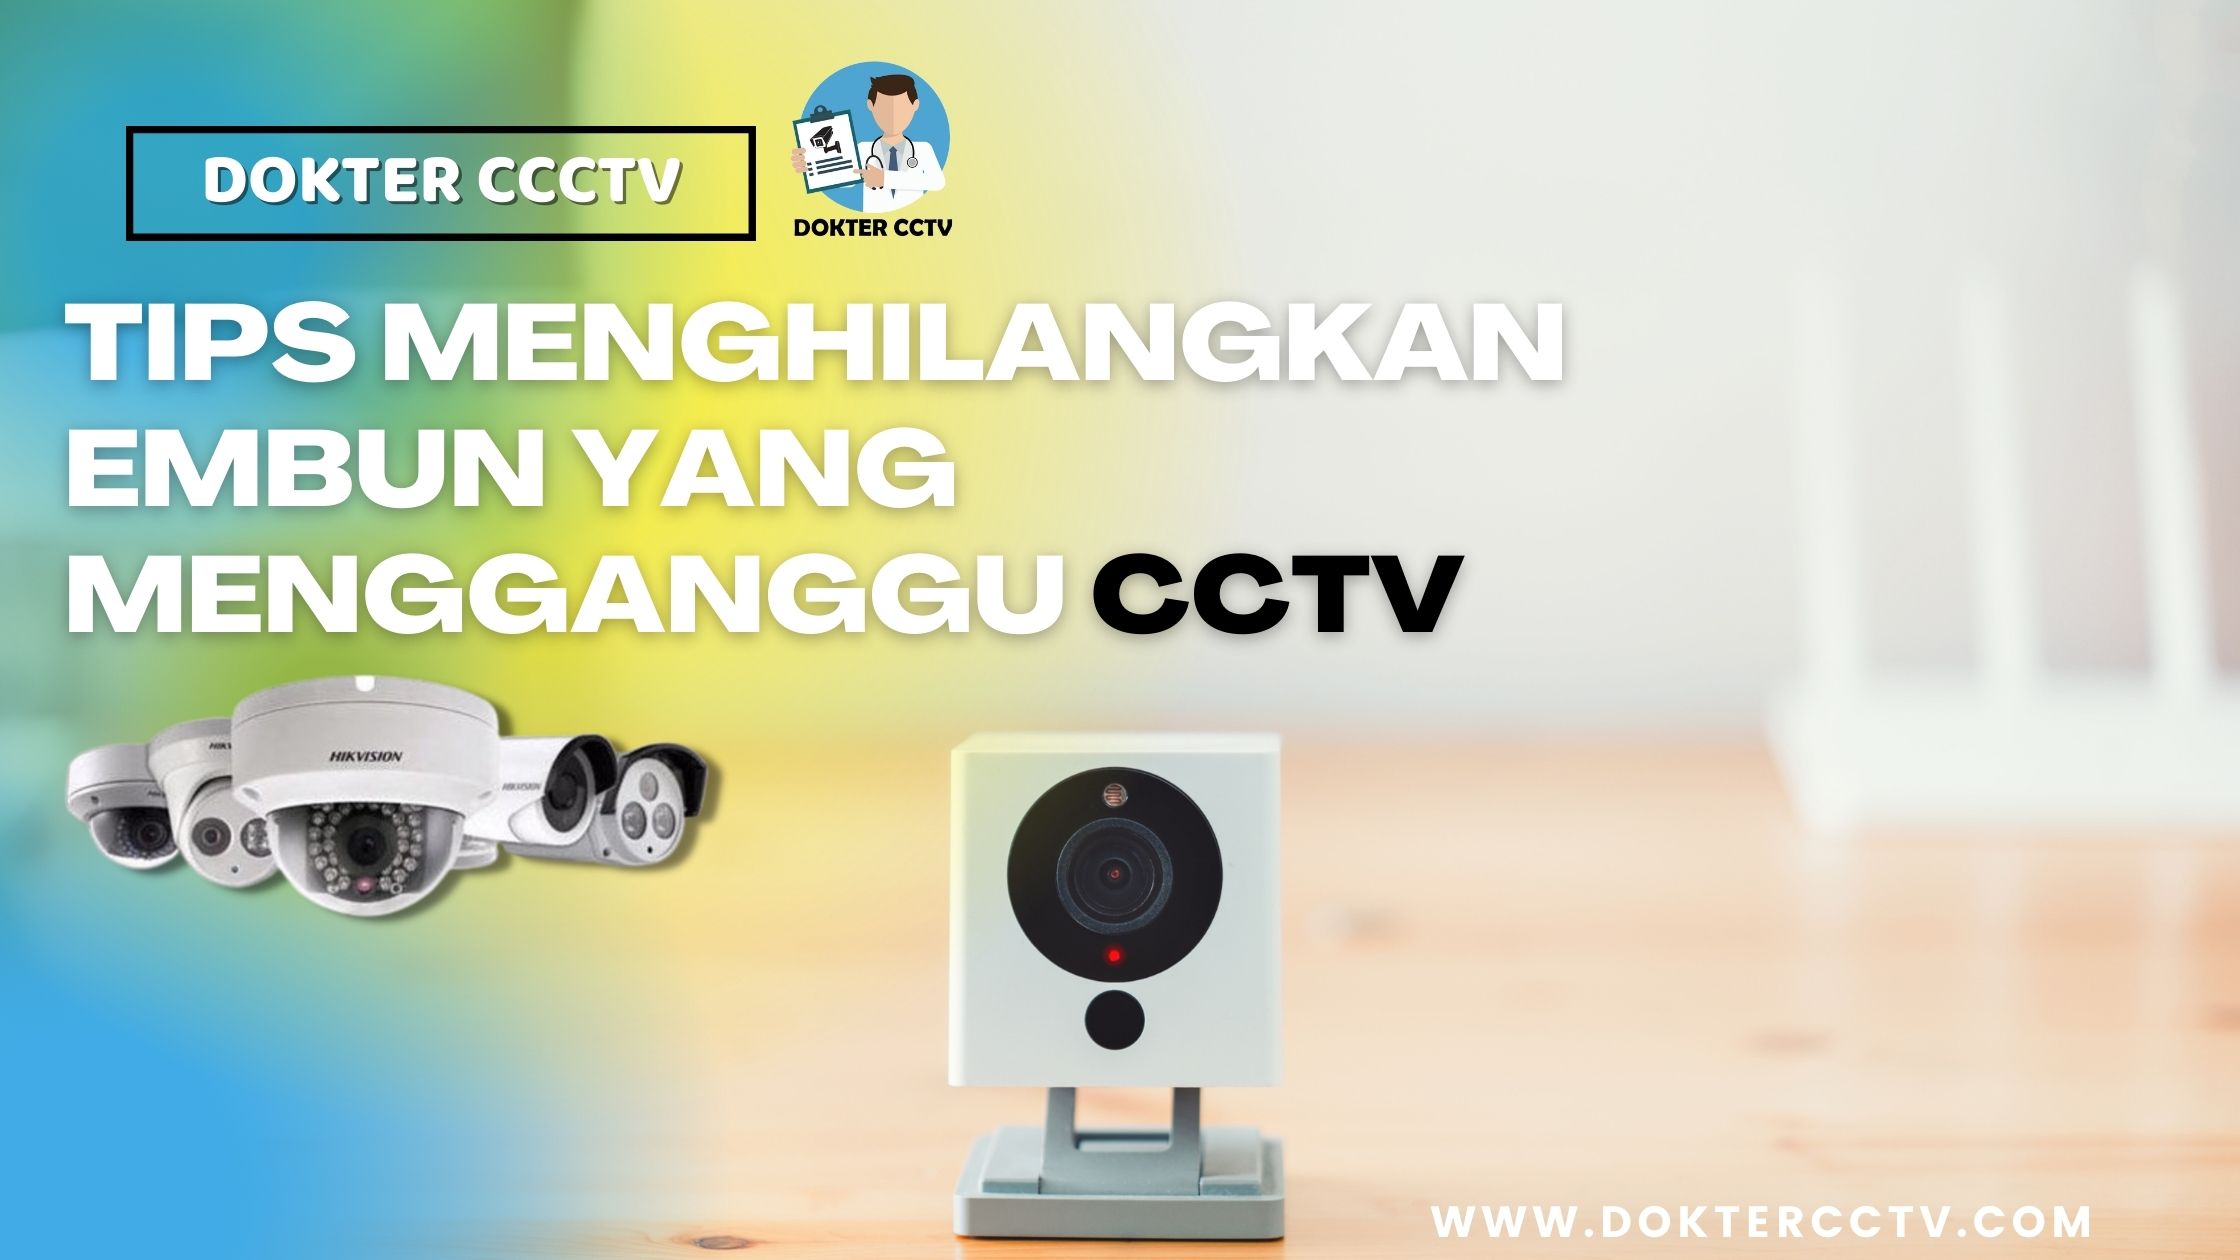 TIPS MENGHILANGKAN EMBUN YANG MENGGANGGU CCTV